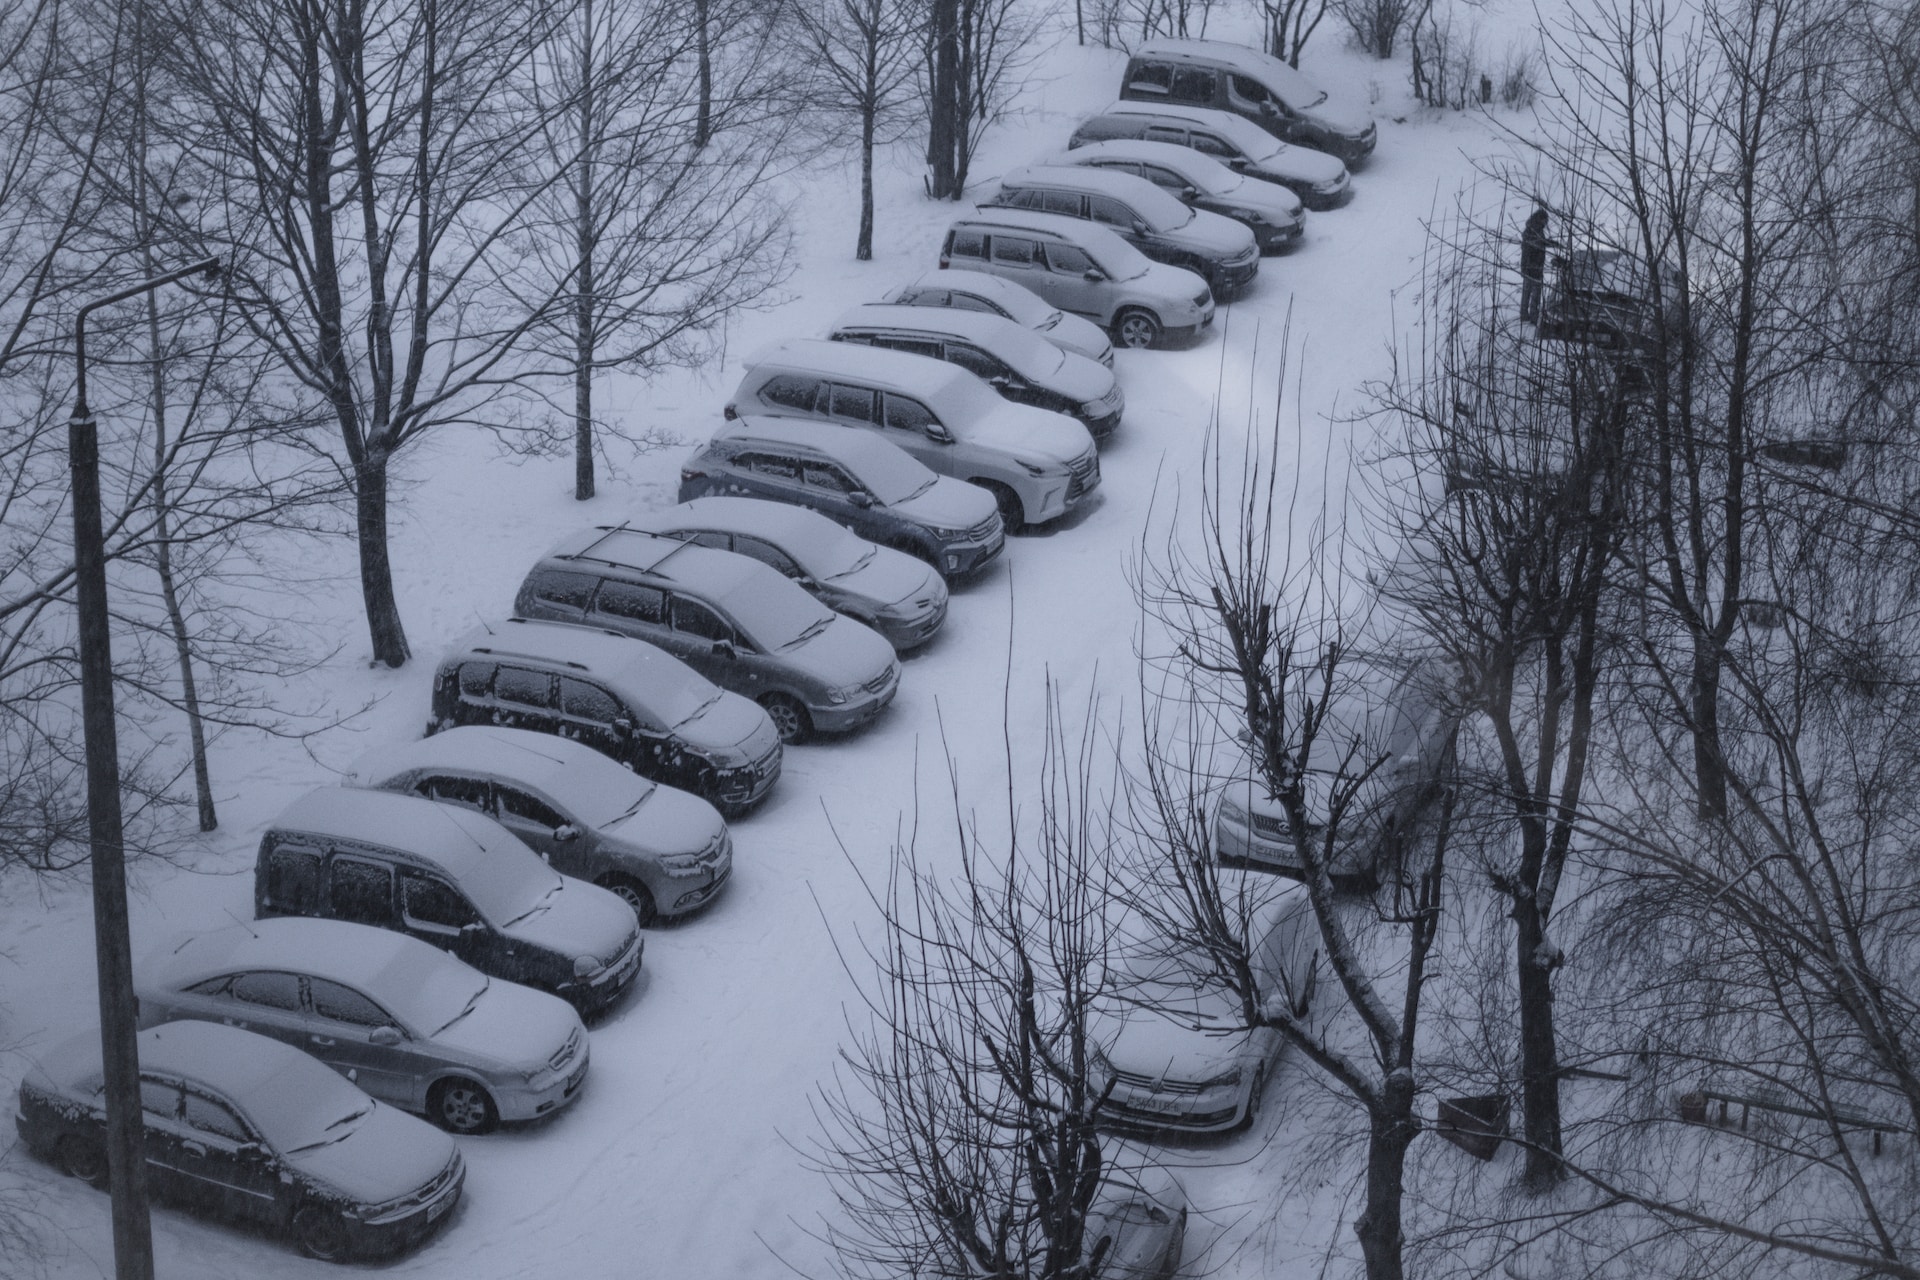 A snowy parking lot.